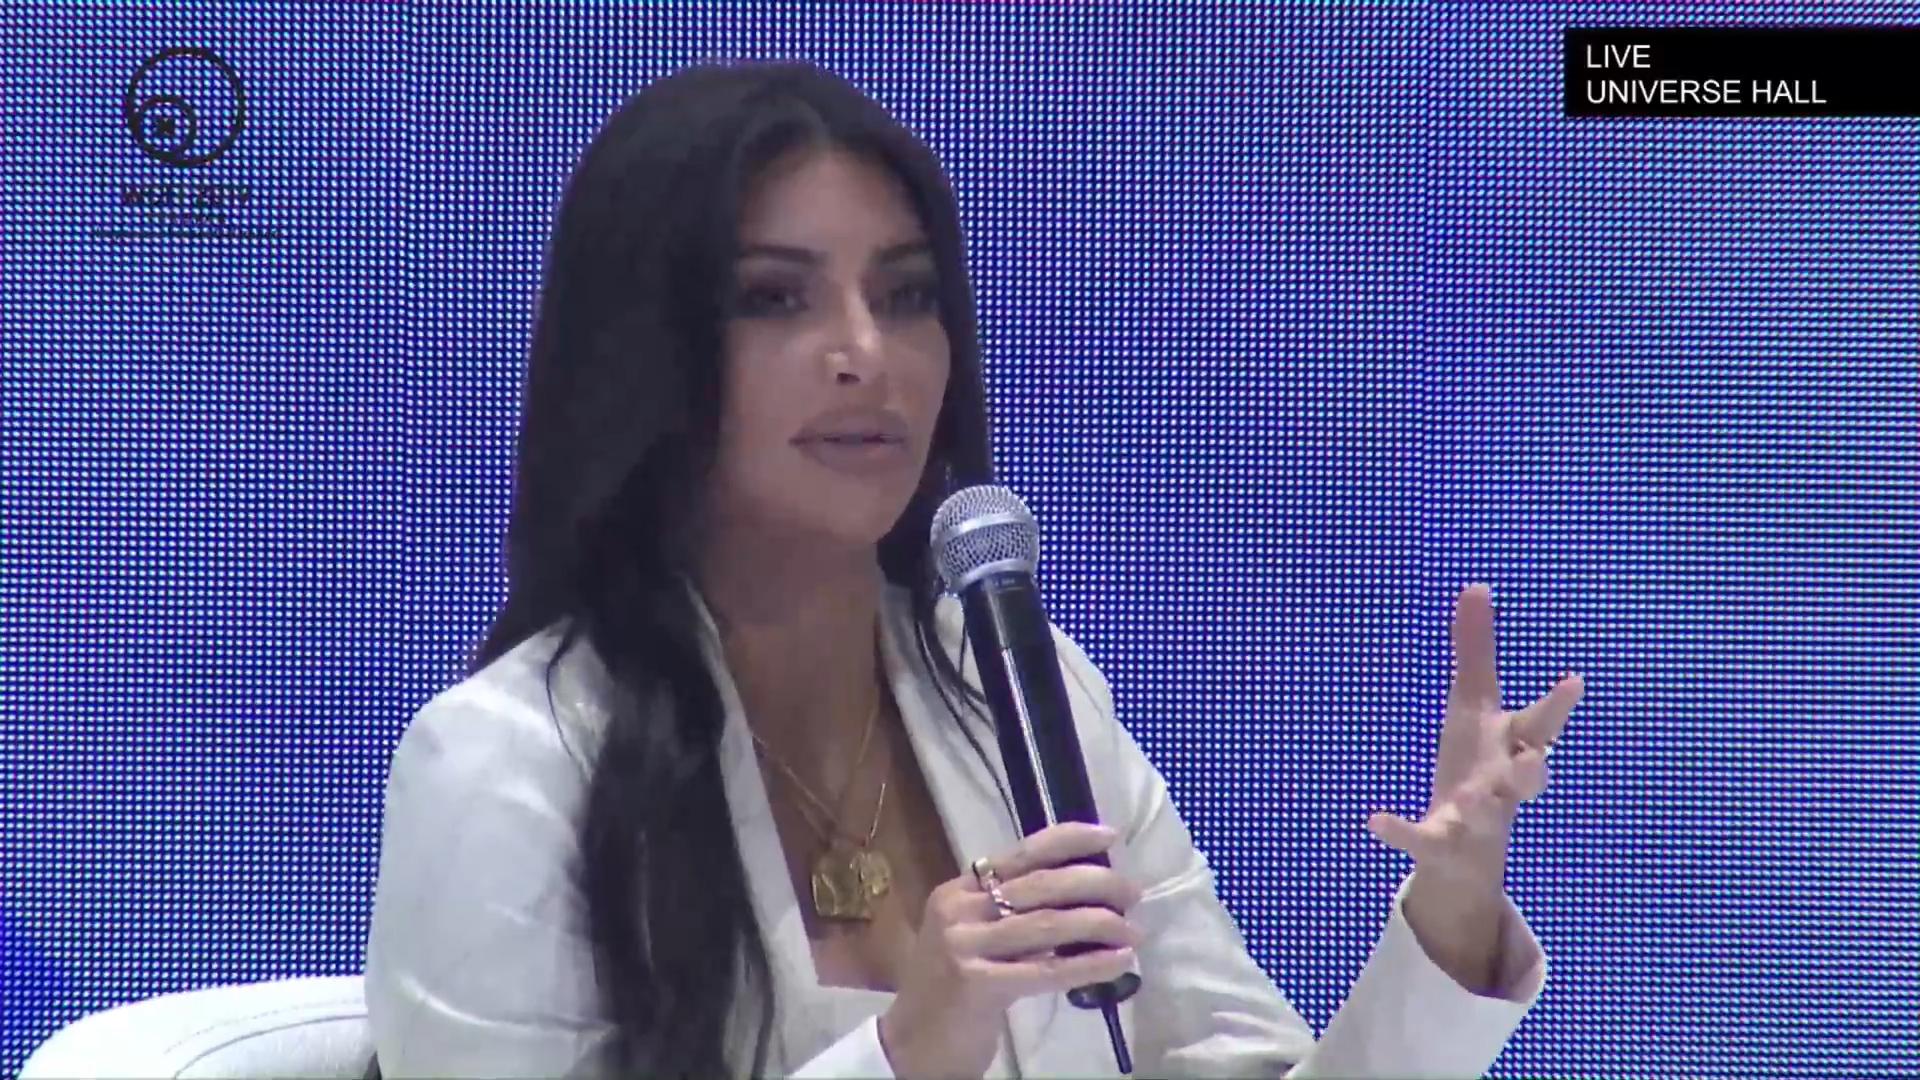 Kim Kardashian speaks at WCIT 2019